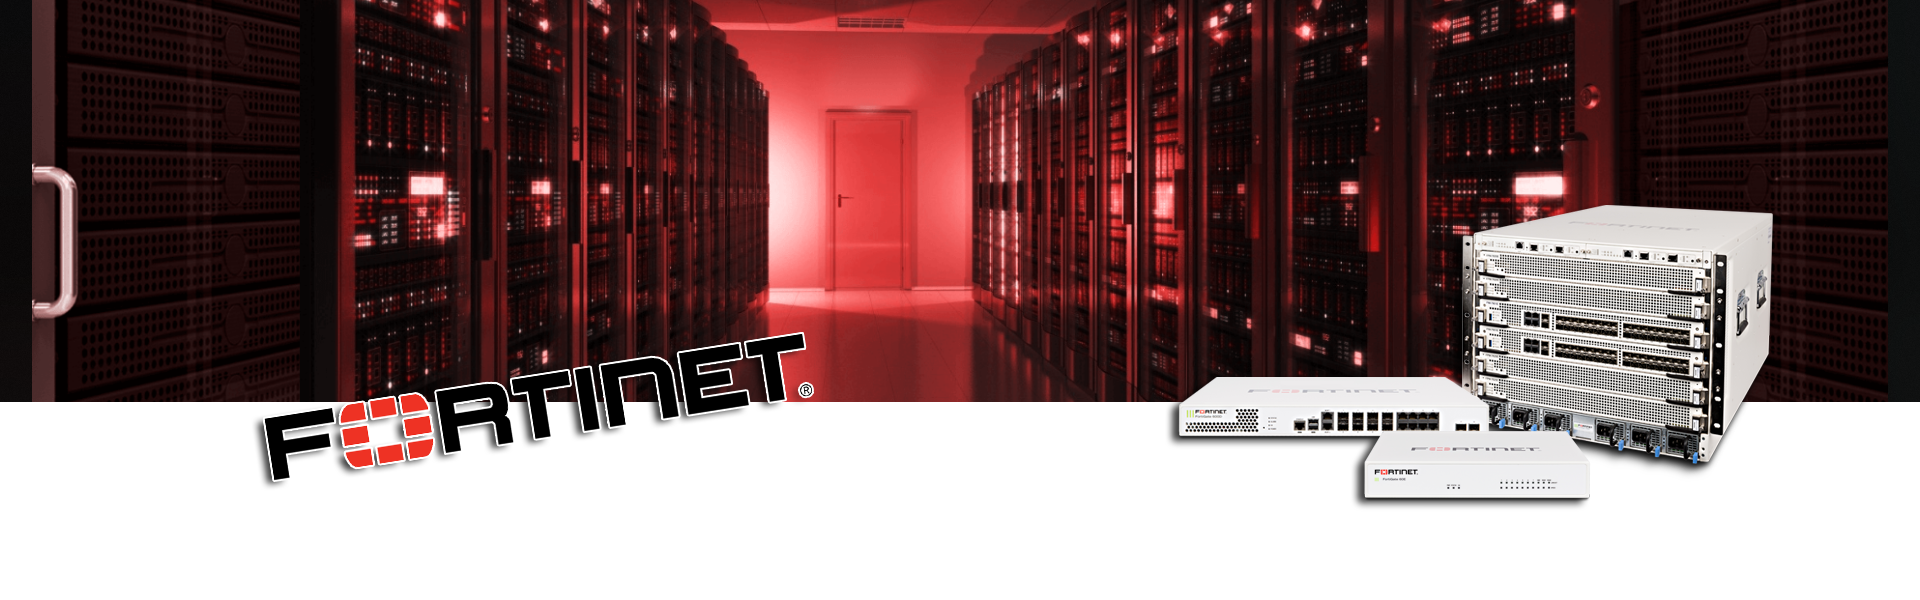 Server Room Fortinet